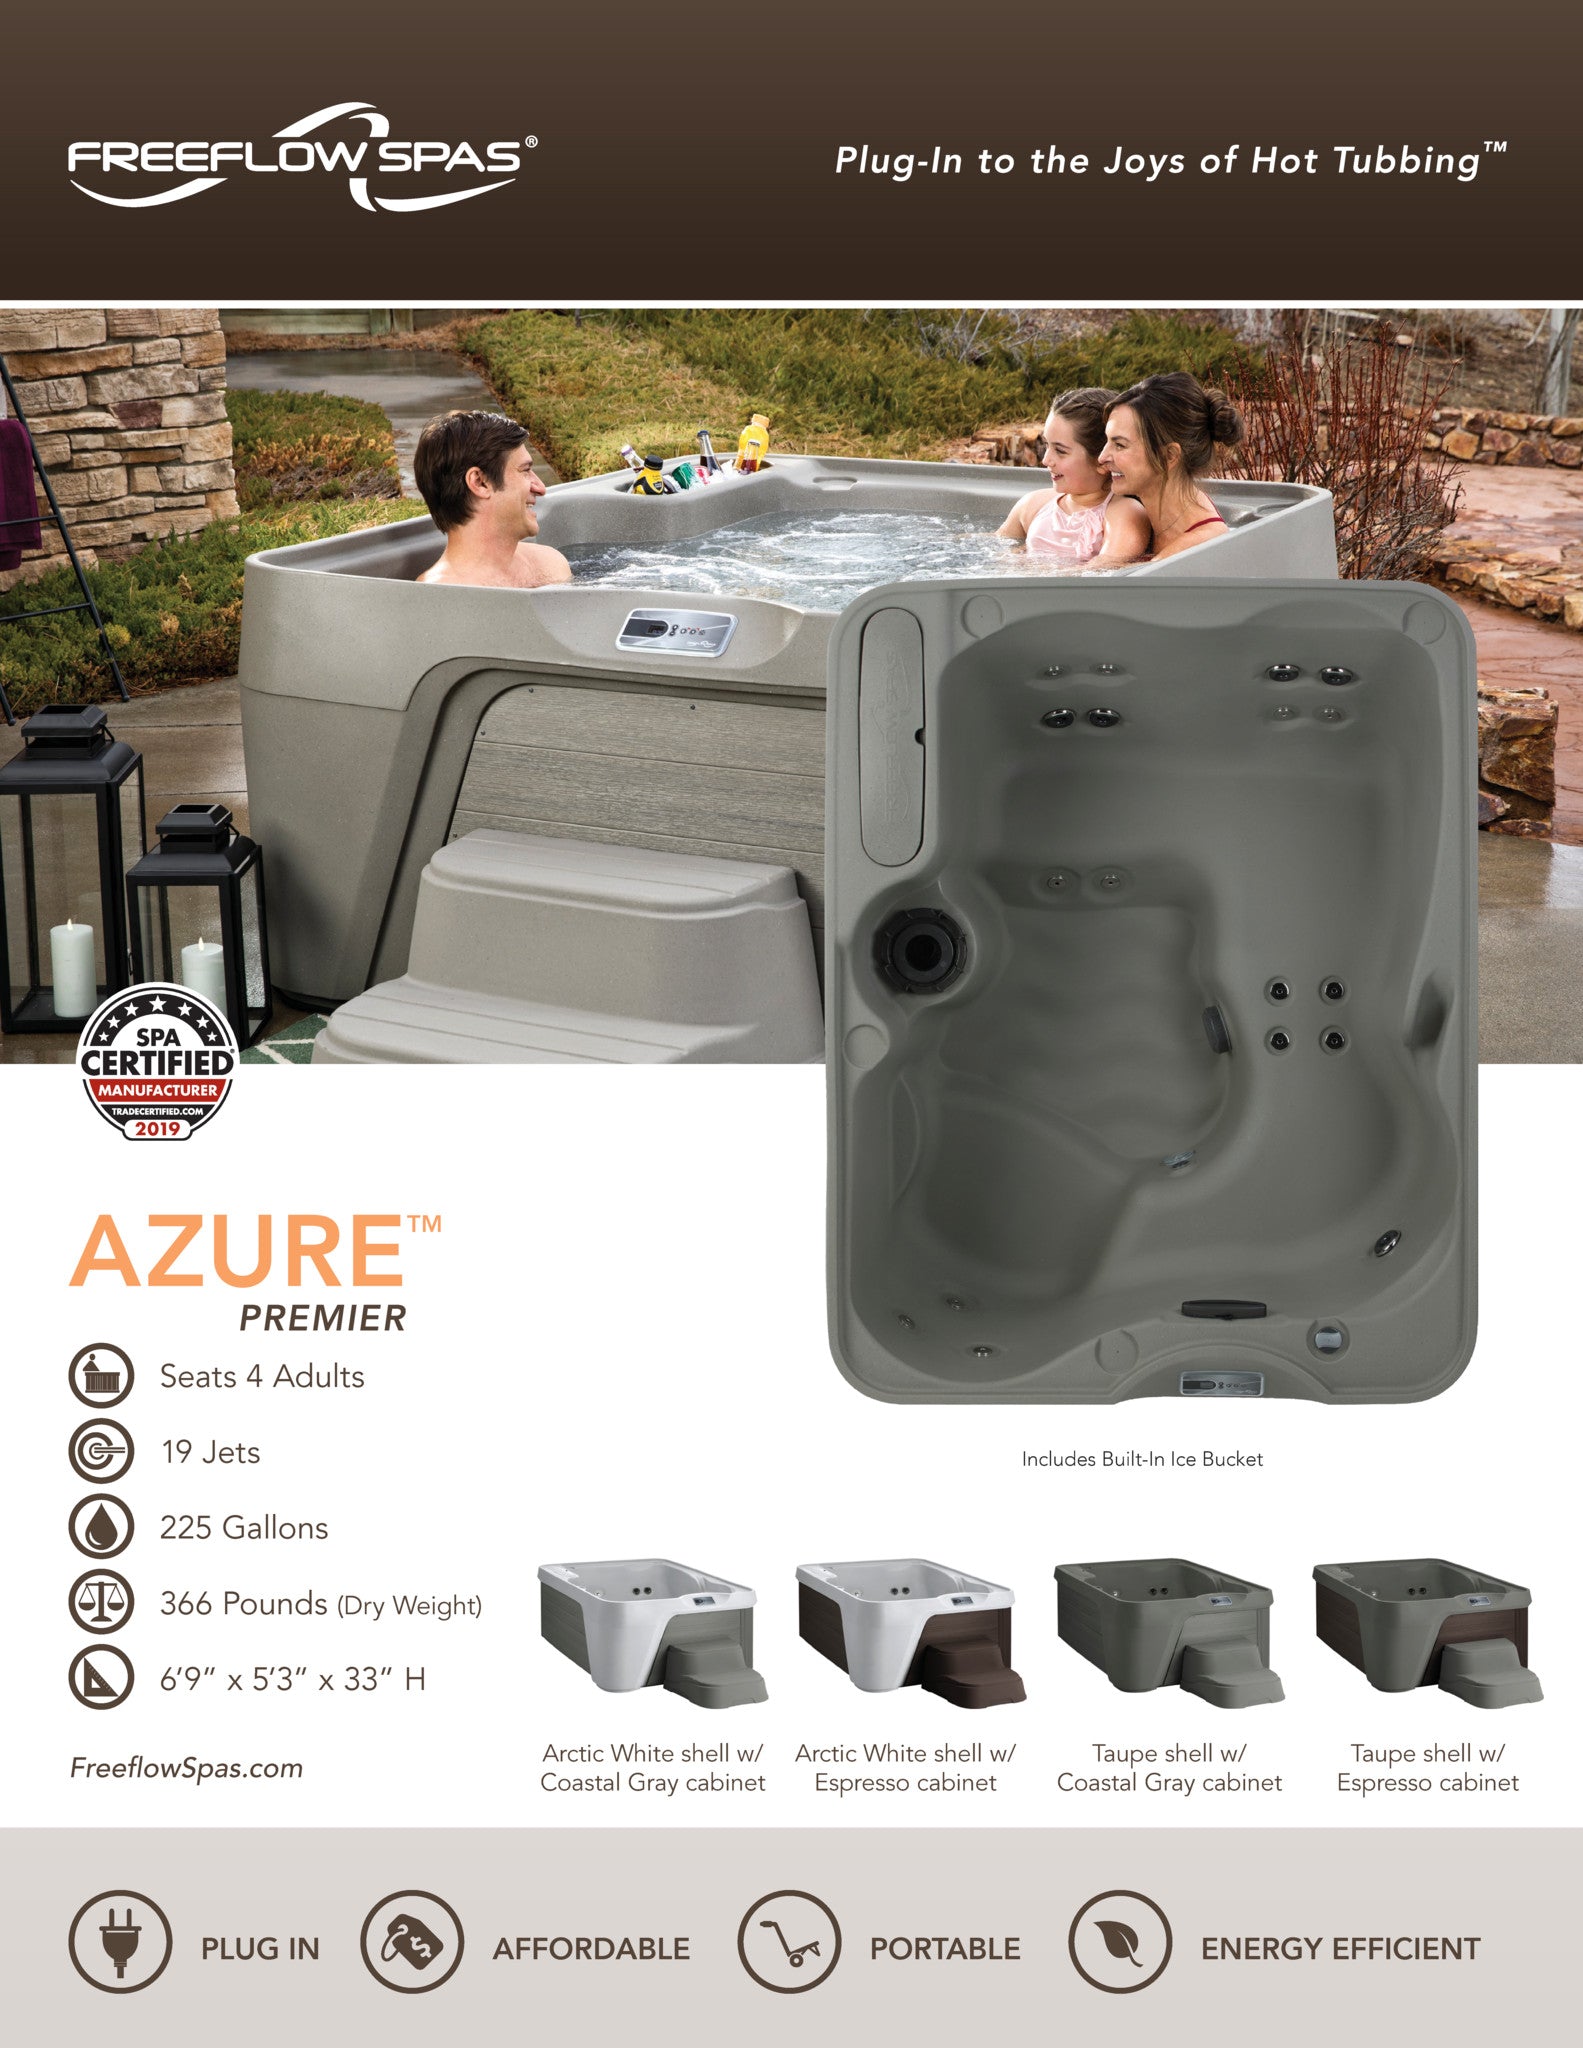 Azure Hot Tub by Freeflow Spas